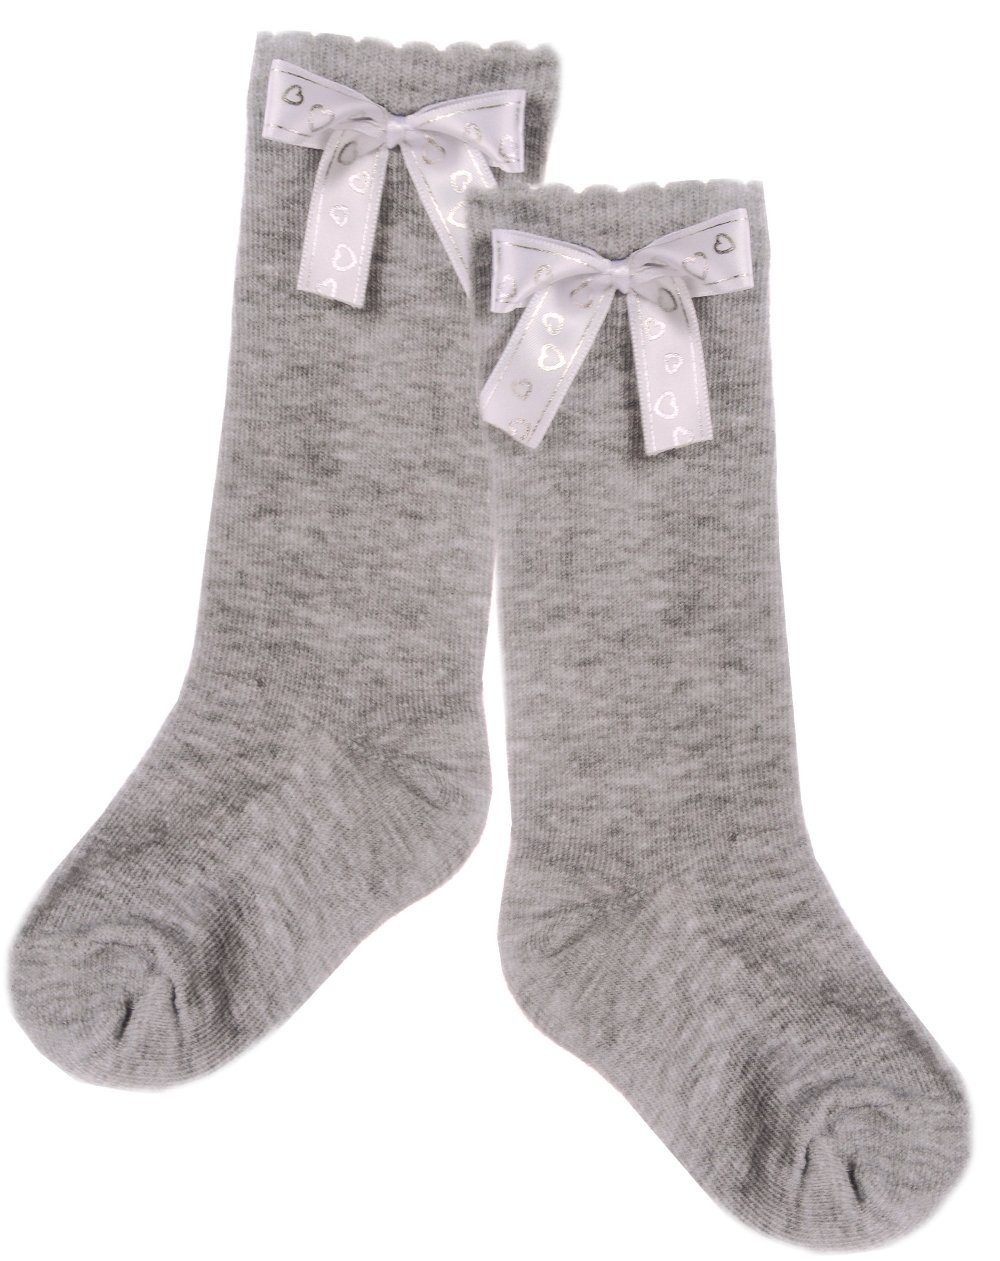 La Bortini Kniestrümpfe Grau Baby festlich Kinder Socken für Strümpfe Kniestrümpfe und in